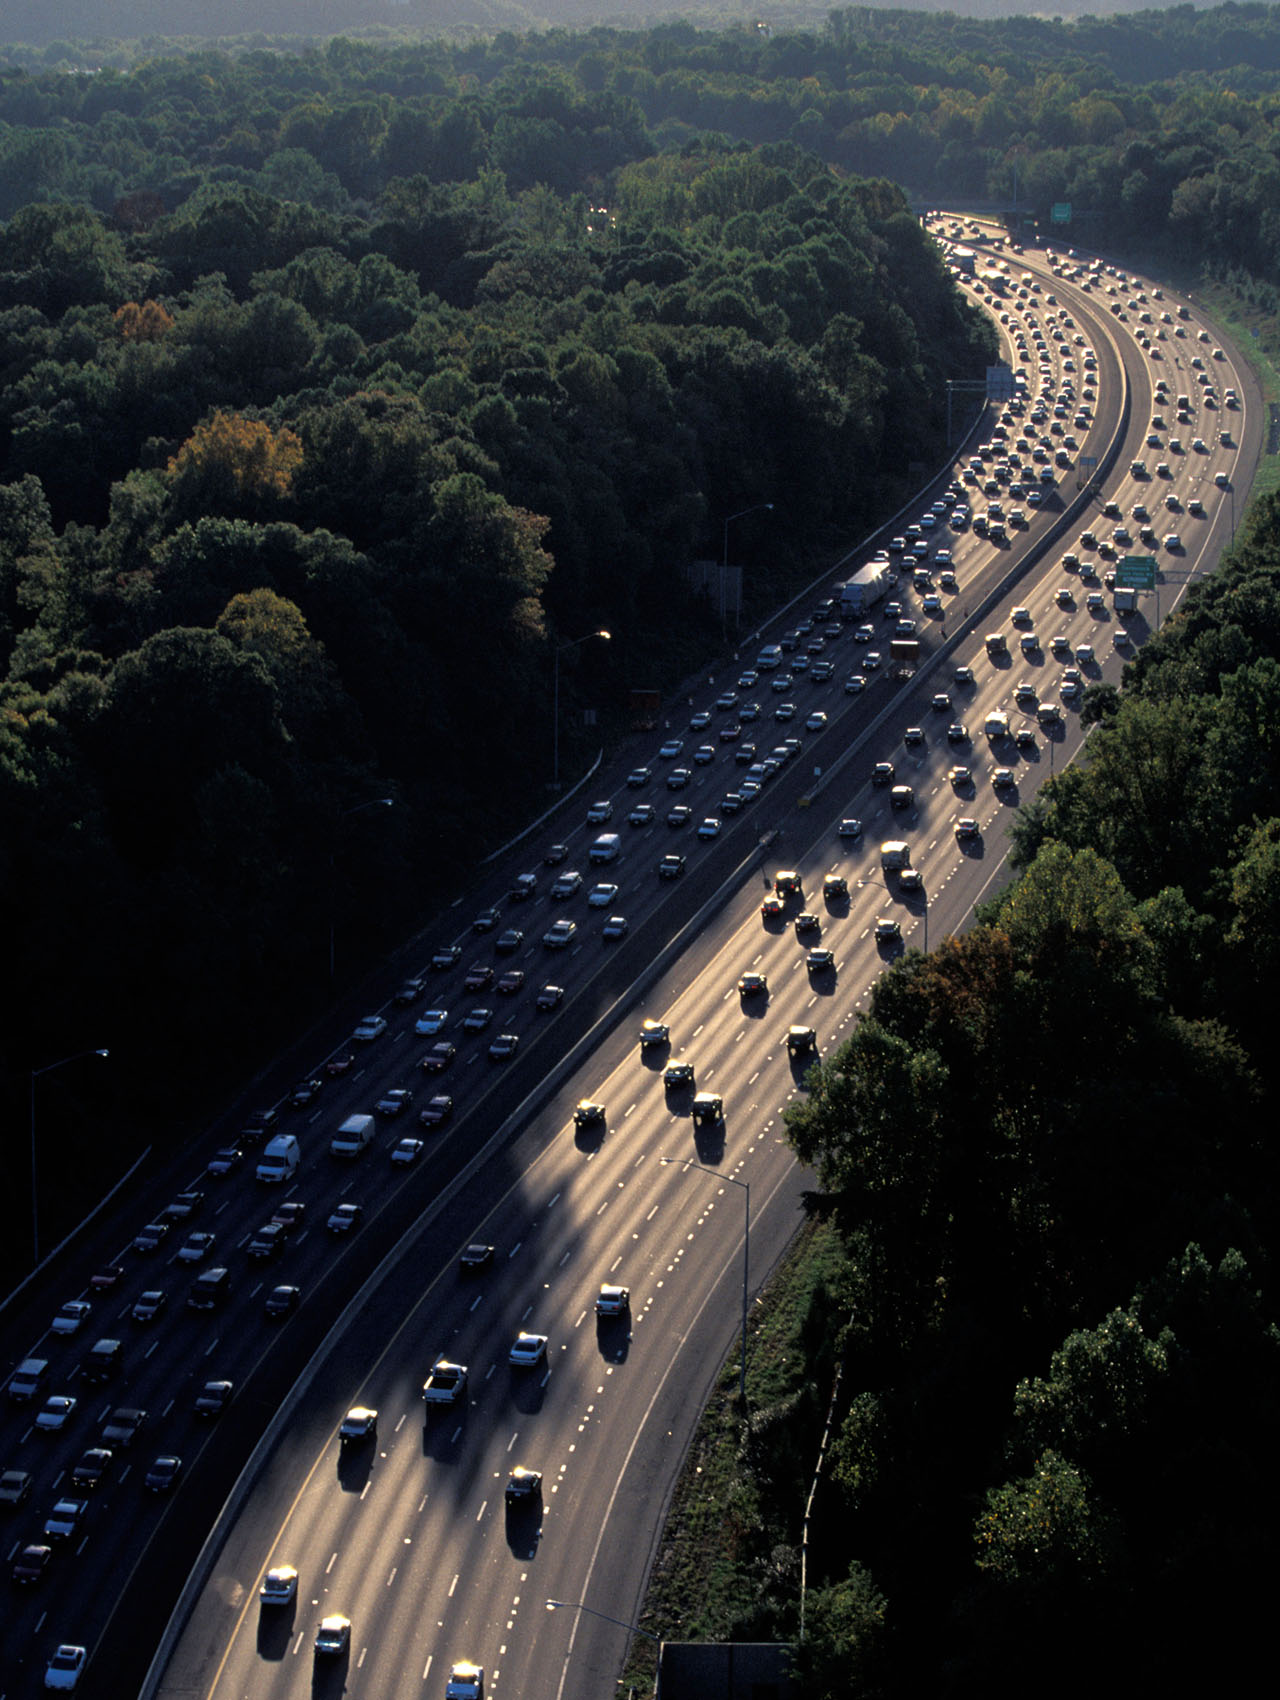 Traffic on the Washington DC Beltway